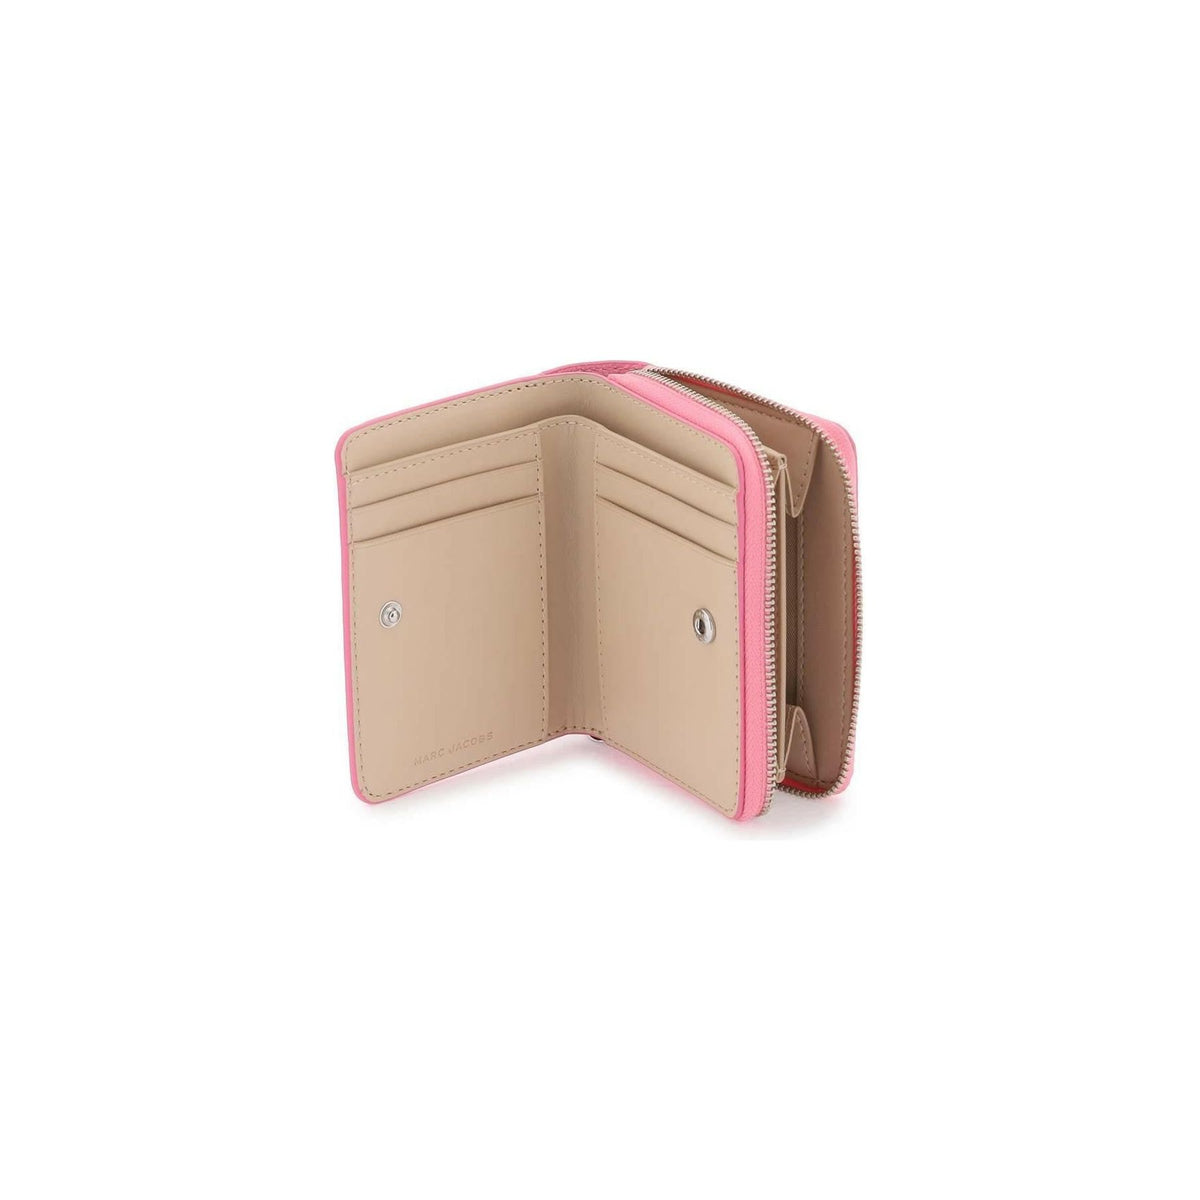 Petal Pink Genuine Leather 'The Wallet' Mini Compact Wallet MARC JACOBS JOHN JULIA.